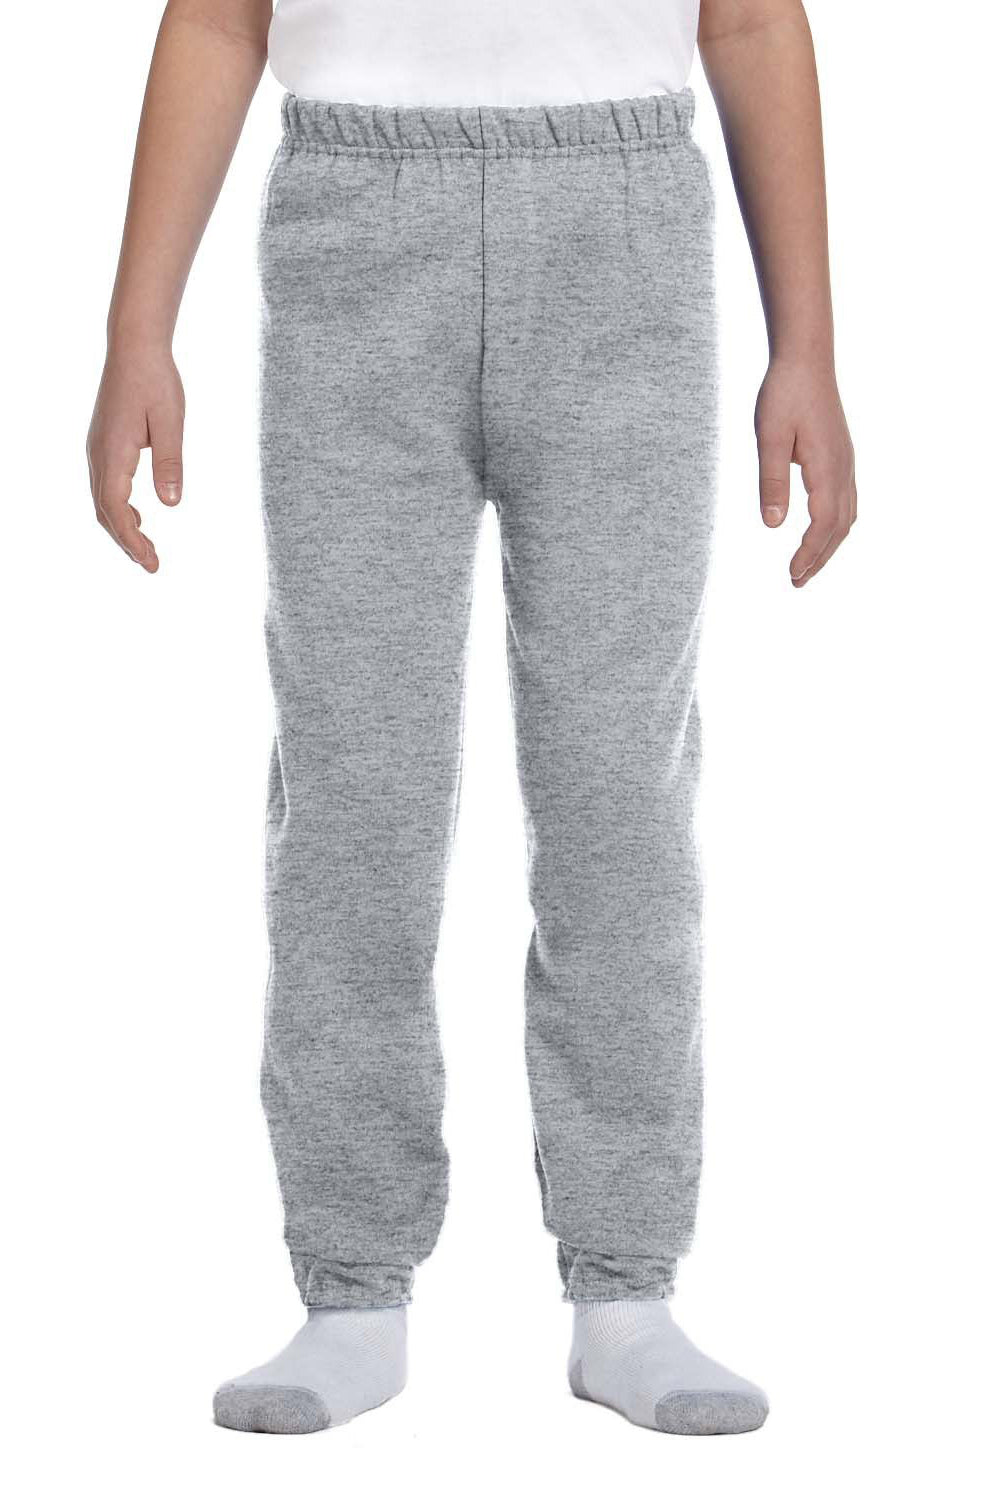 Jerzees 973B Youth NuBlend Fleece Sweatpants Oxford Grey Front